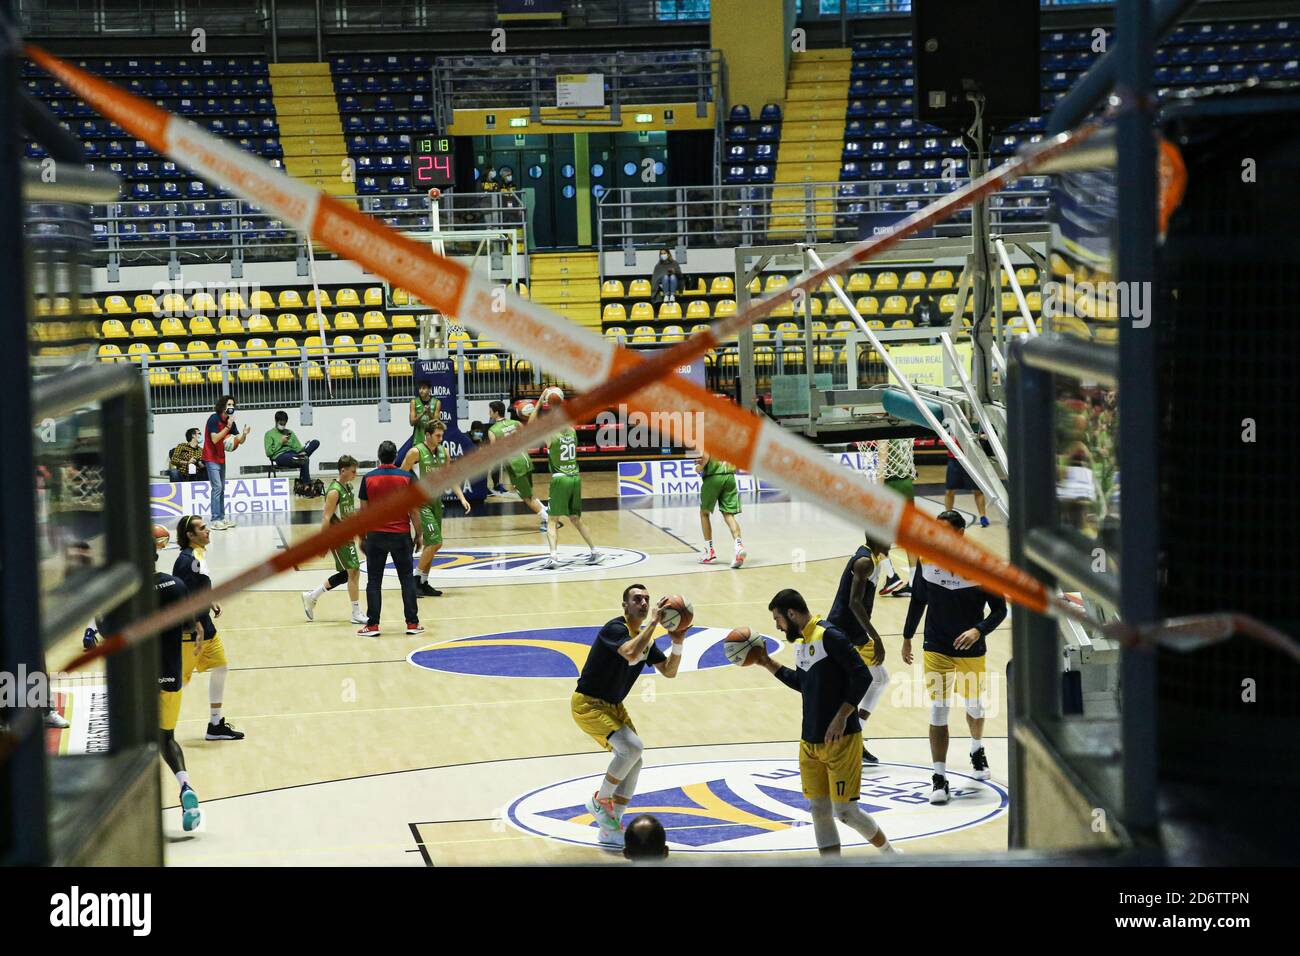 First home match for Reale Mutua Basket Torino vs Green Shop Pallacanestro Biella. Reale Mutua Basket Torino wins 104-86. (Photo by Norberto Maccagno/PacifiPress) Stock Photo